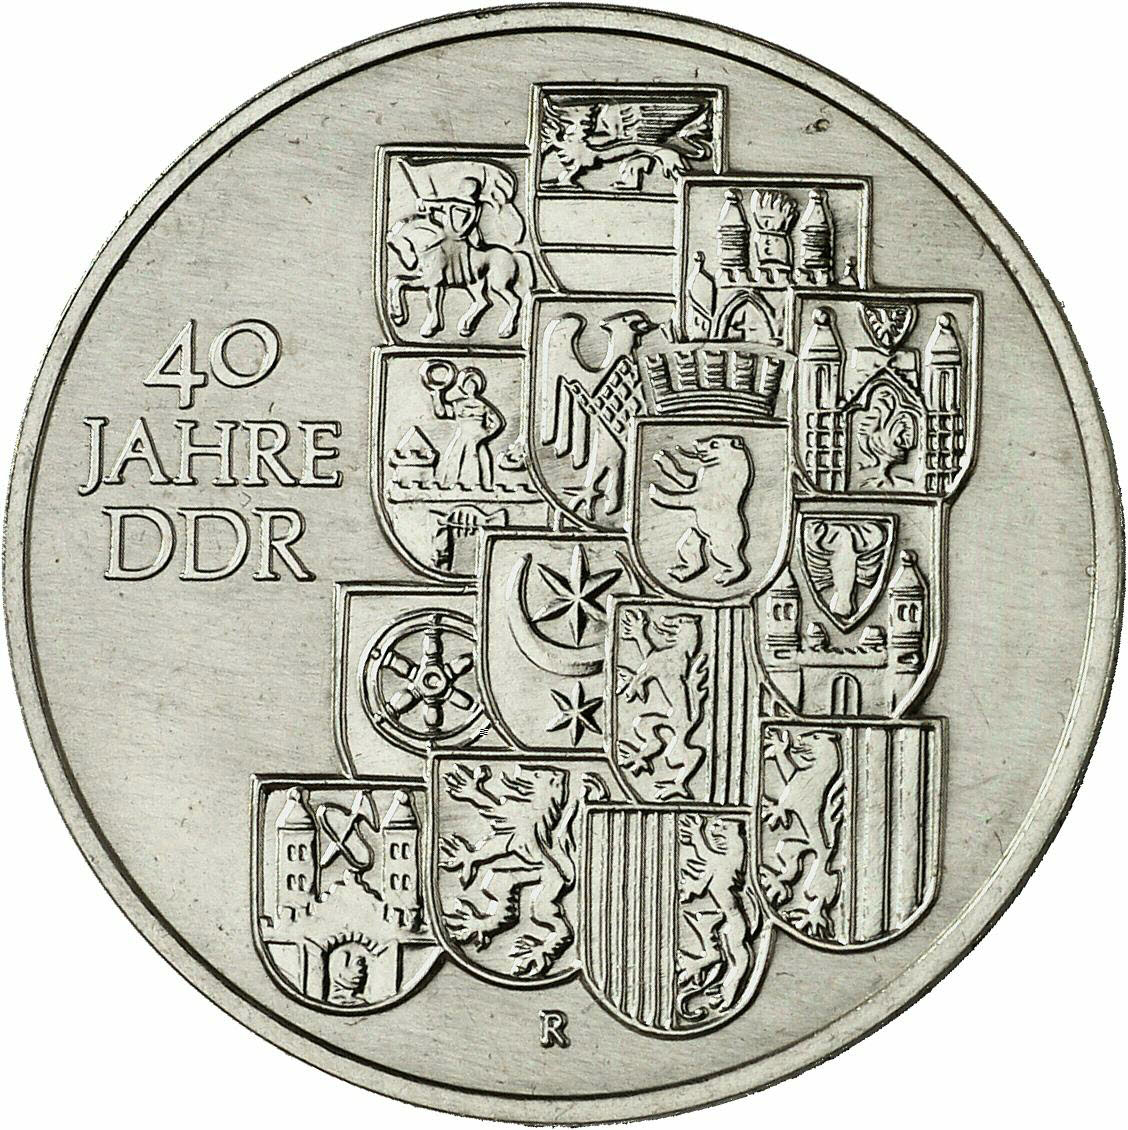 DE 10 Mark der DDR 1989 A